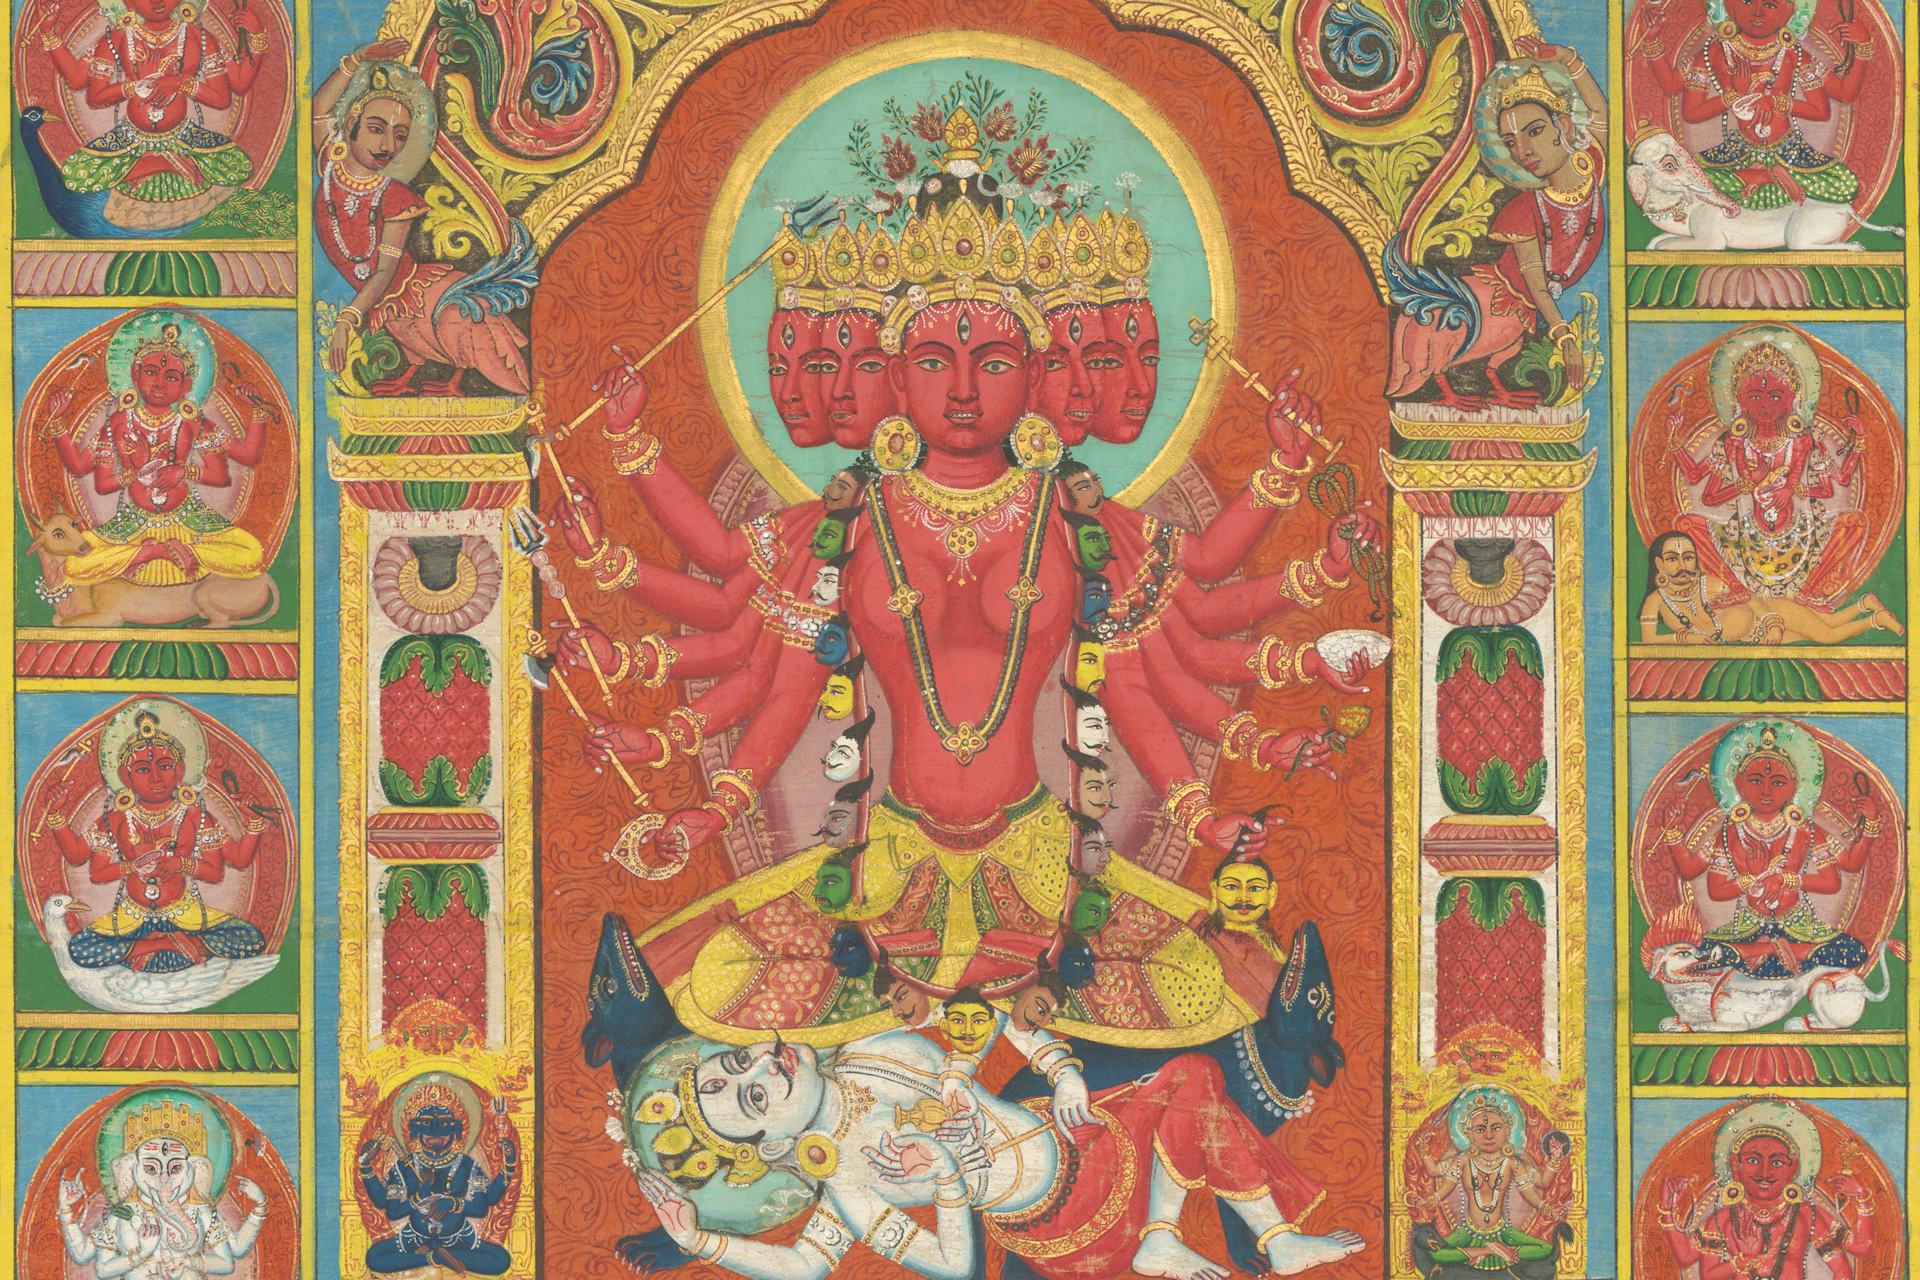 all hindu gods together